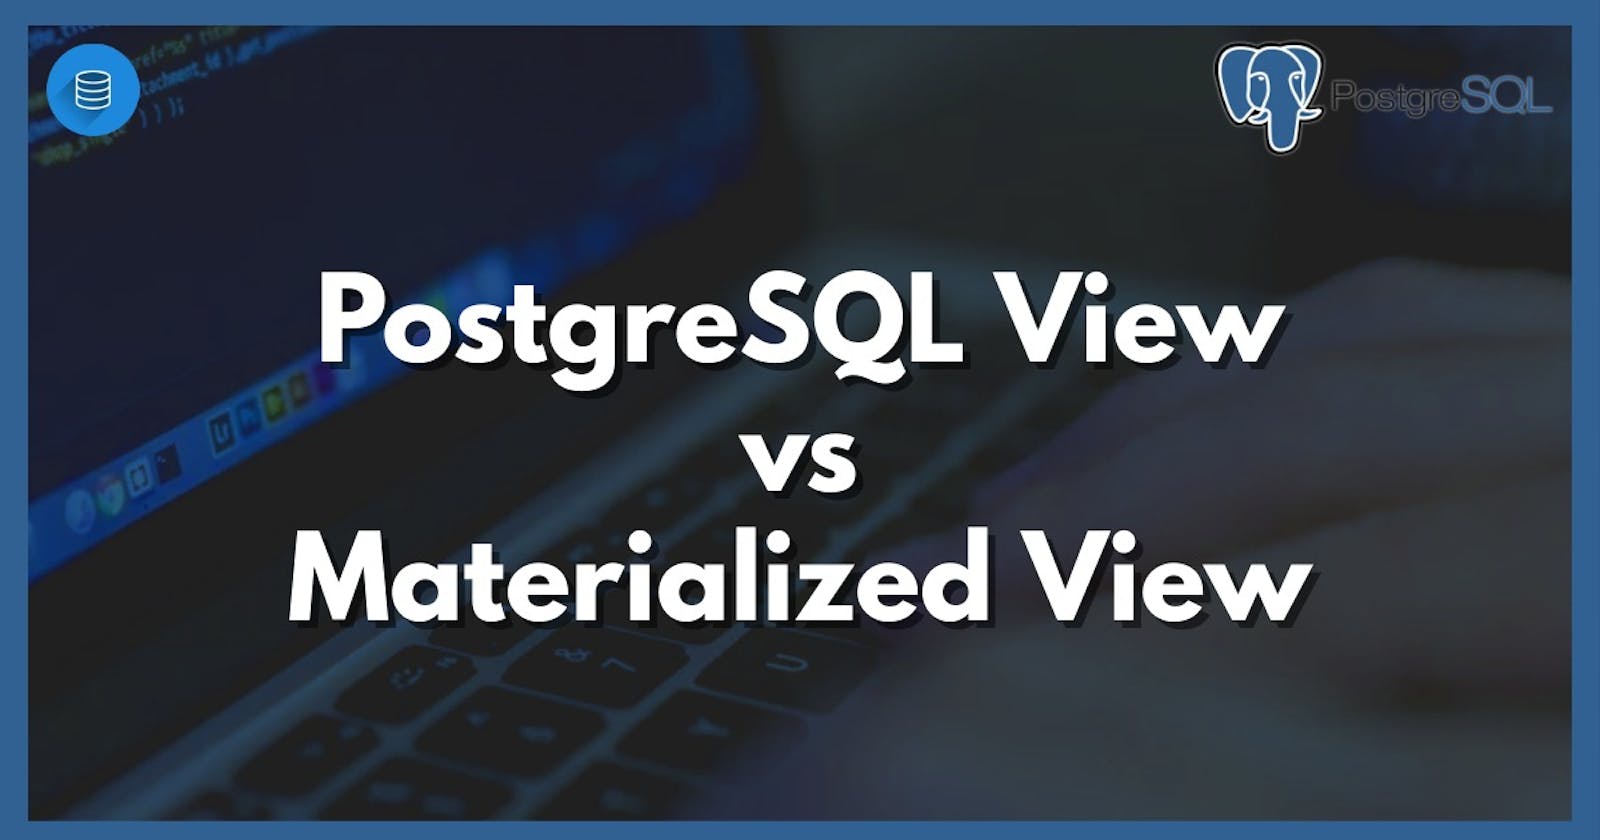 PostgreSQL VIEW vs MATERIALIZED VIEW